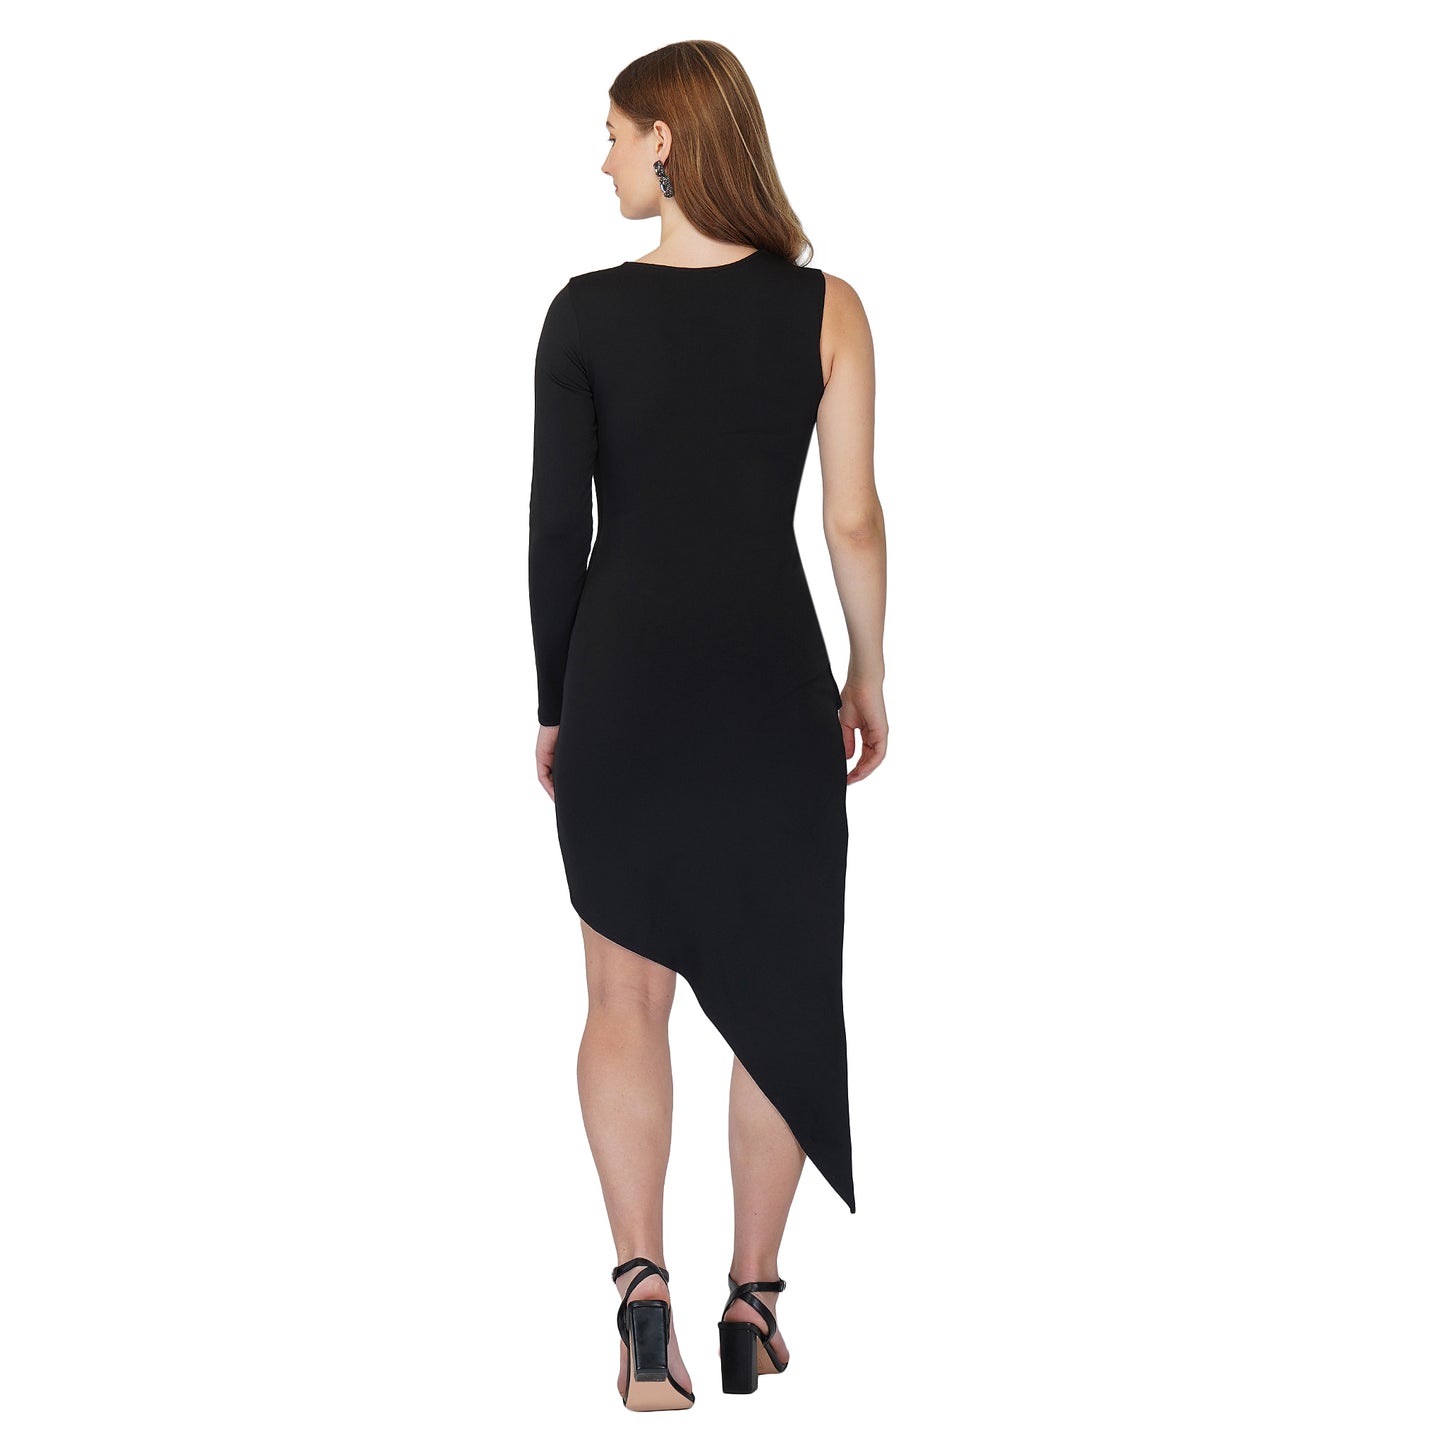 SLAY. Women's Black Asymmetric Dress